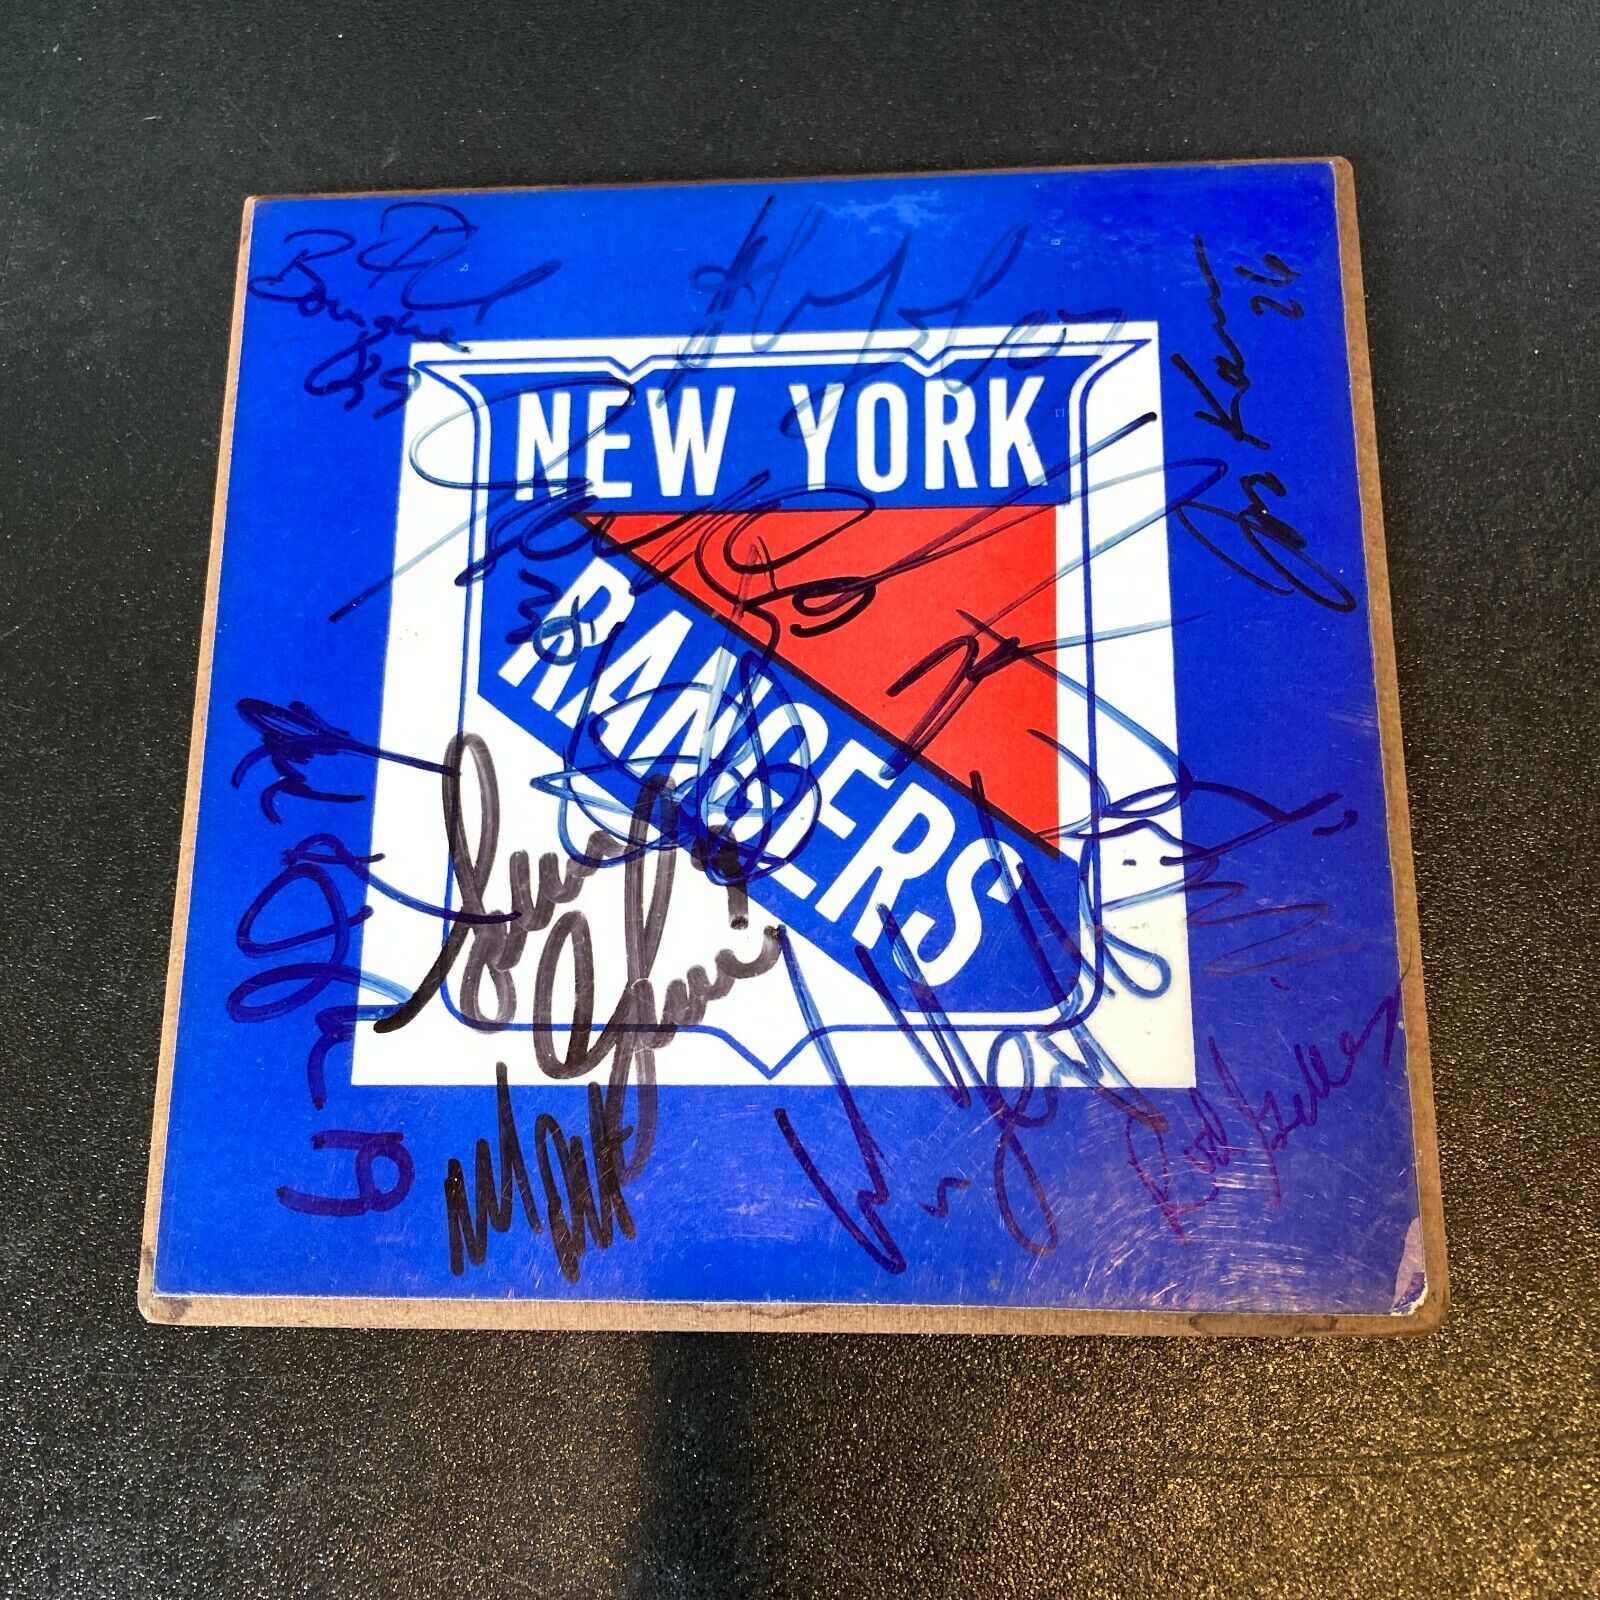 Mike Richter New York Rangers Player Plaque